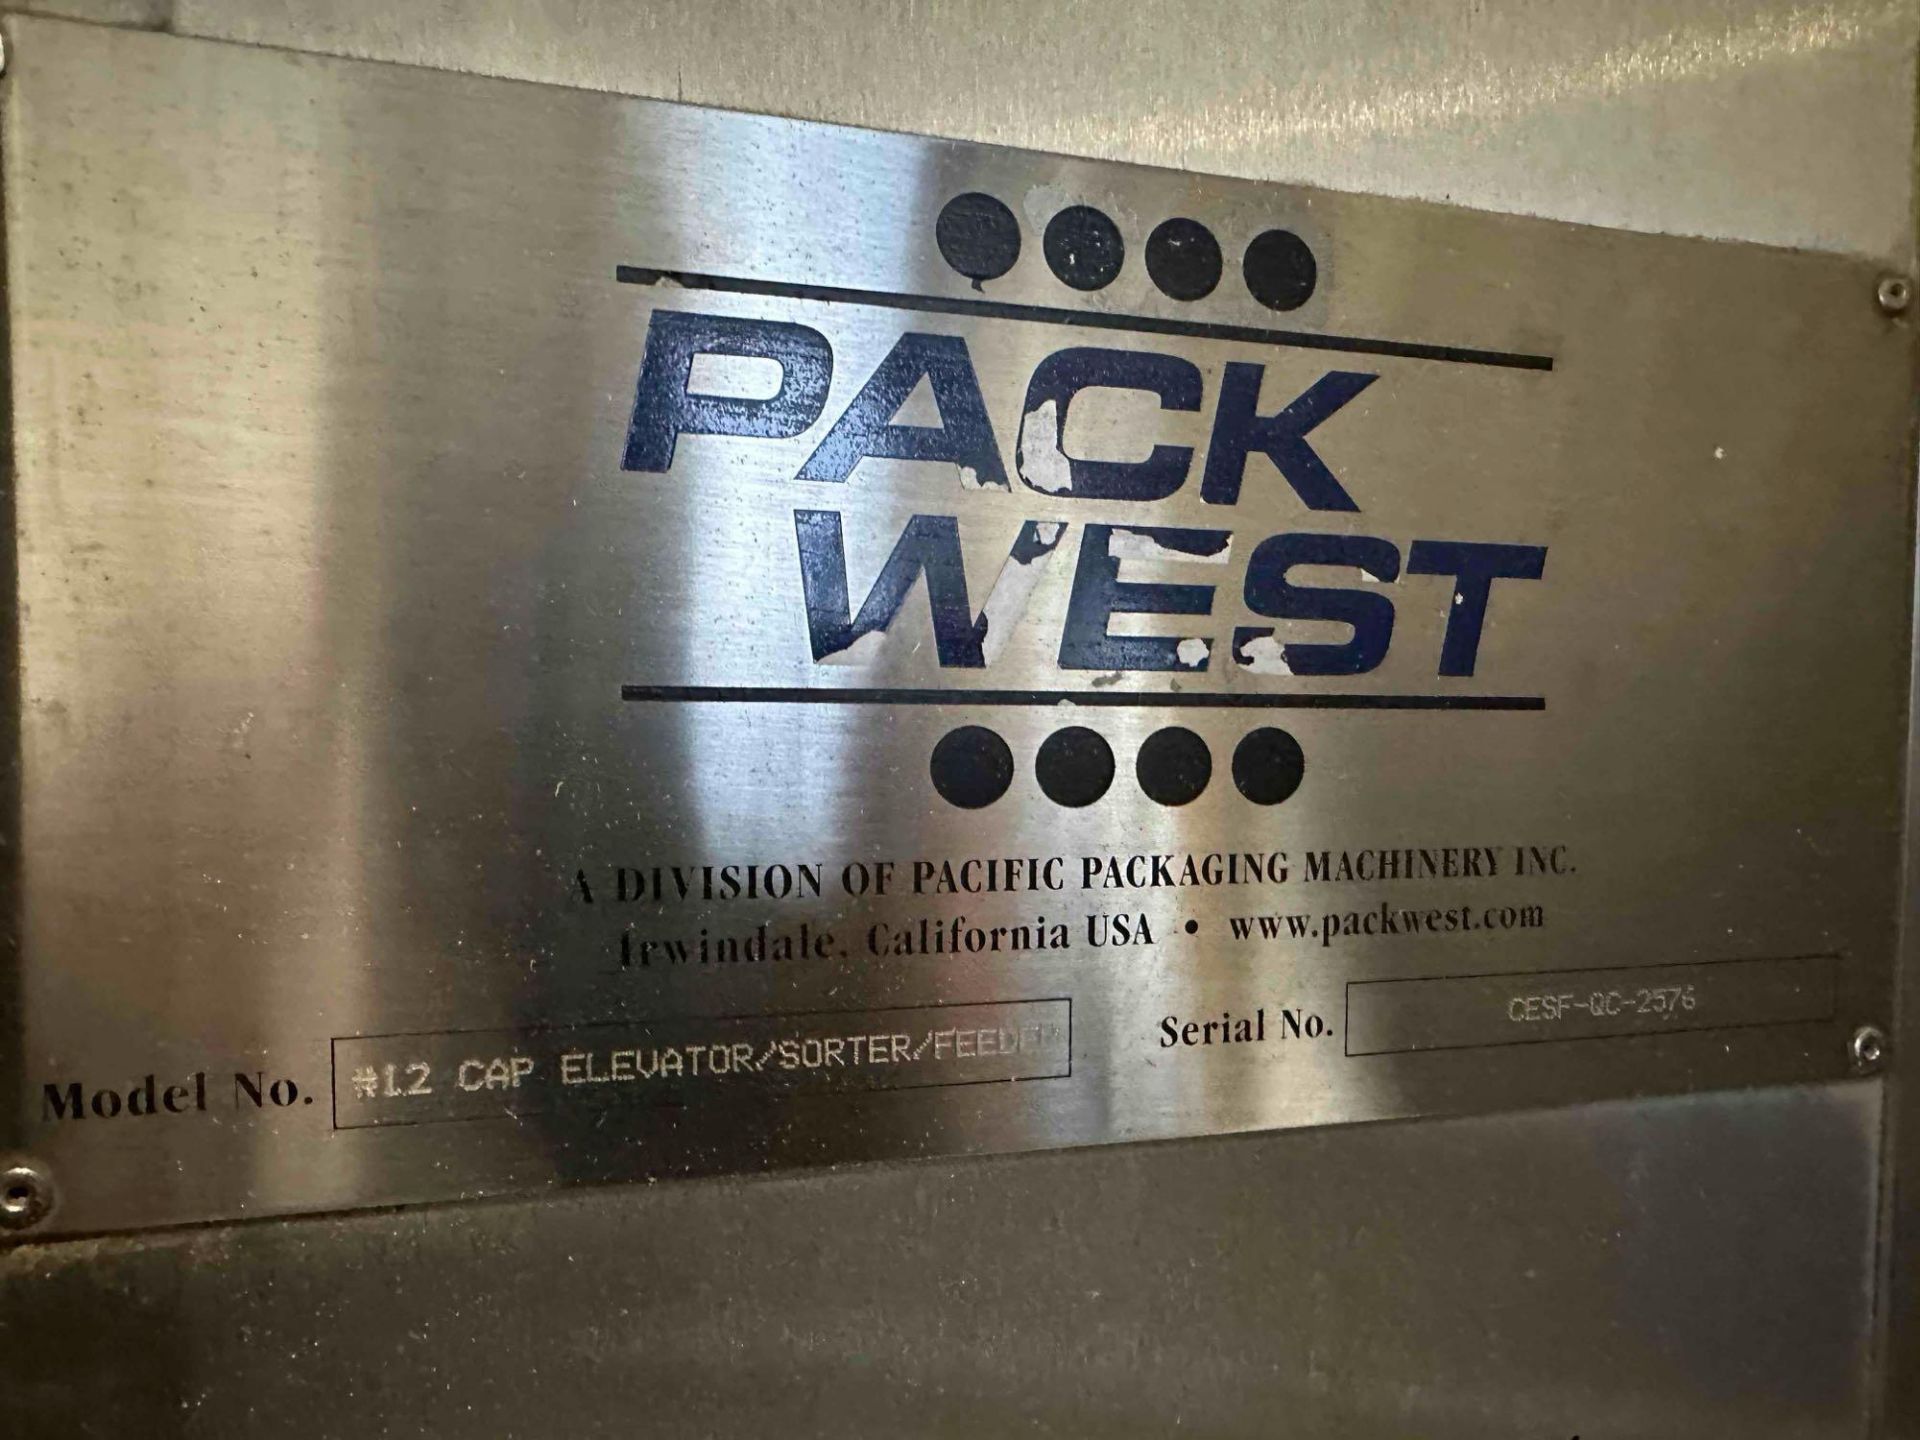 Pack-West 12 ELEVATOR/SORTER/FEEDER Stainless Steel Cleated Incline Conveyor W/ 0.5 HP Motor - Image 6 of 6